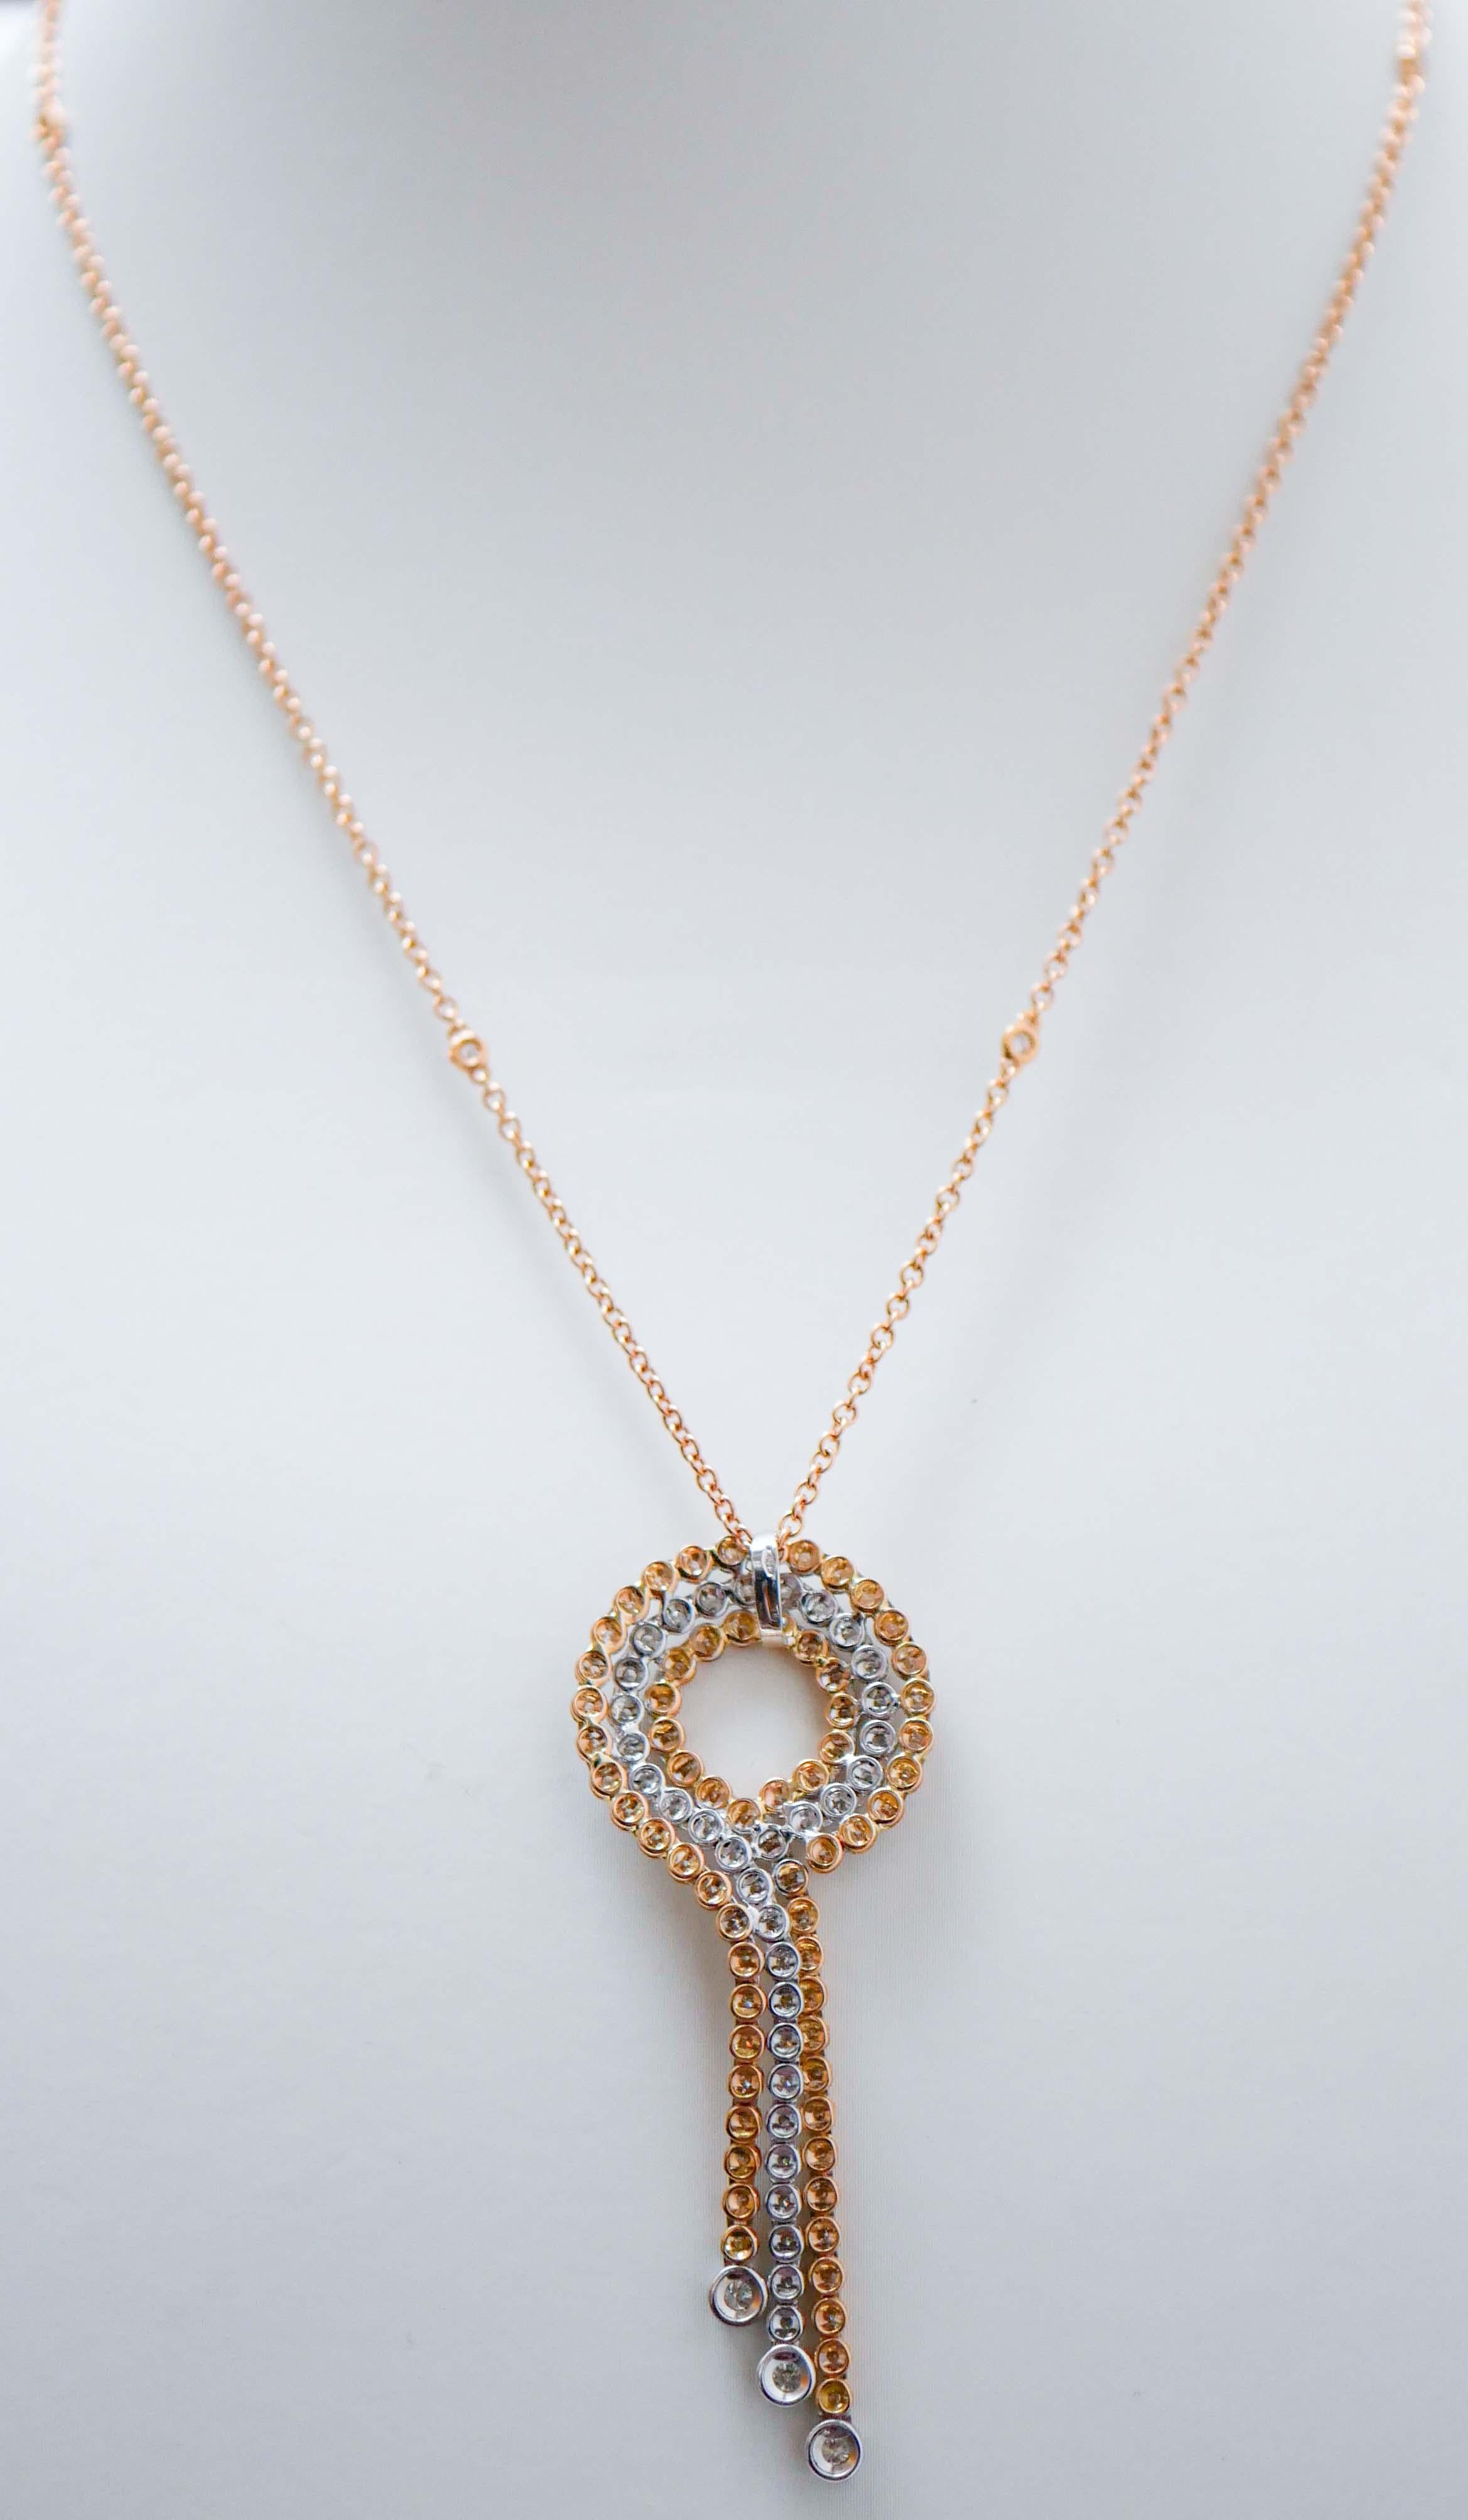 Brilliant Cut Diamonds, 18 Karat Rose Gold and White Gold Pendant Necklace.